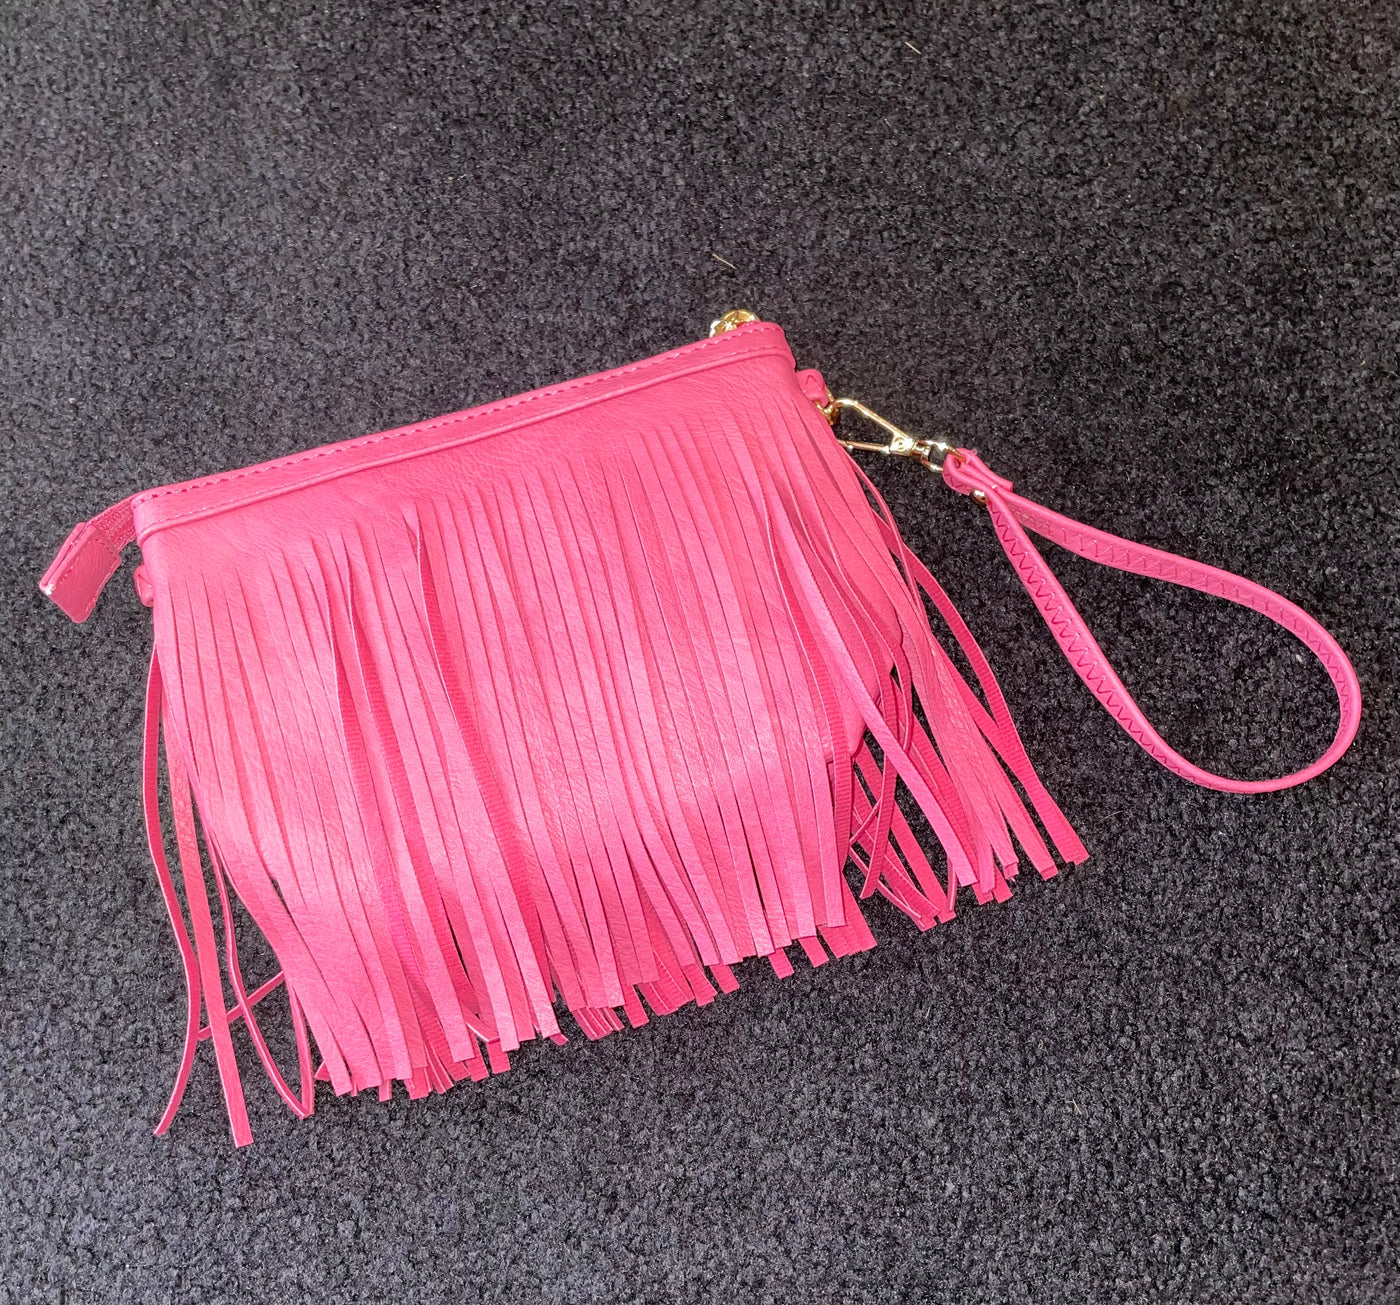 Buy Pink Floral Leather Crossbody Bag for Women Ladies Shoulder Bag Fringe  Girls Crossbody Purse Handbag at Amazon.in